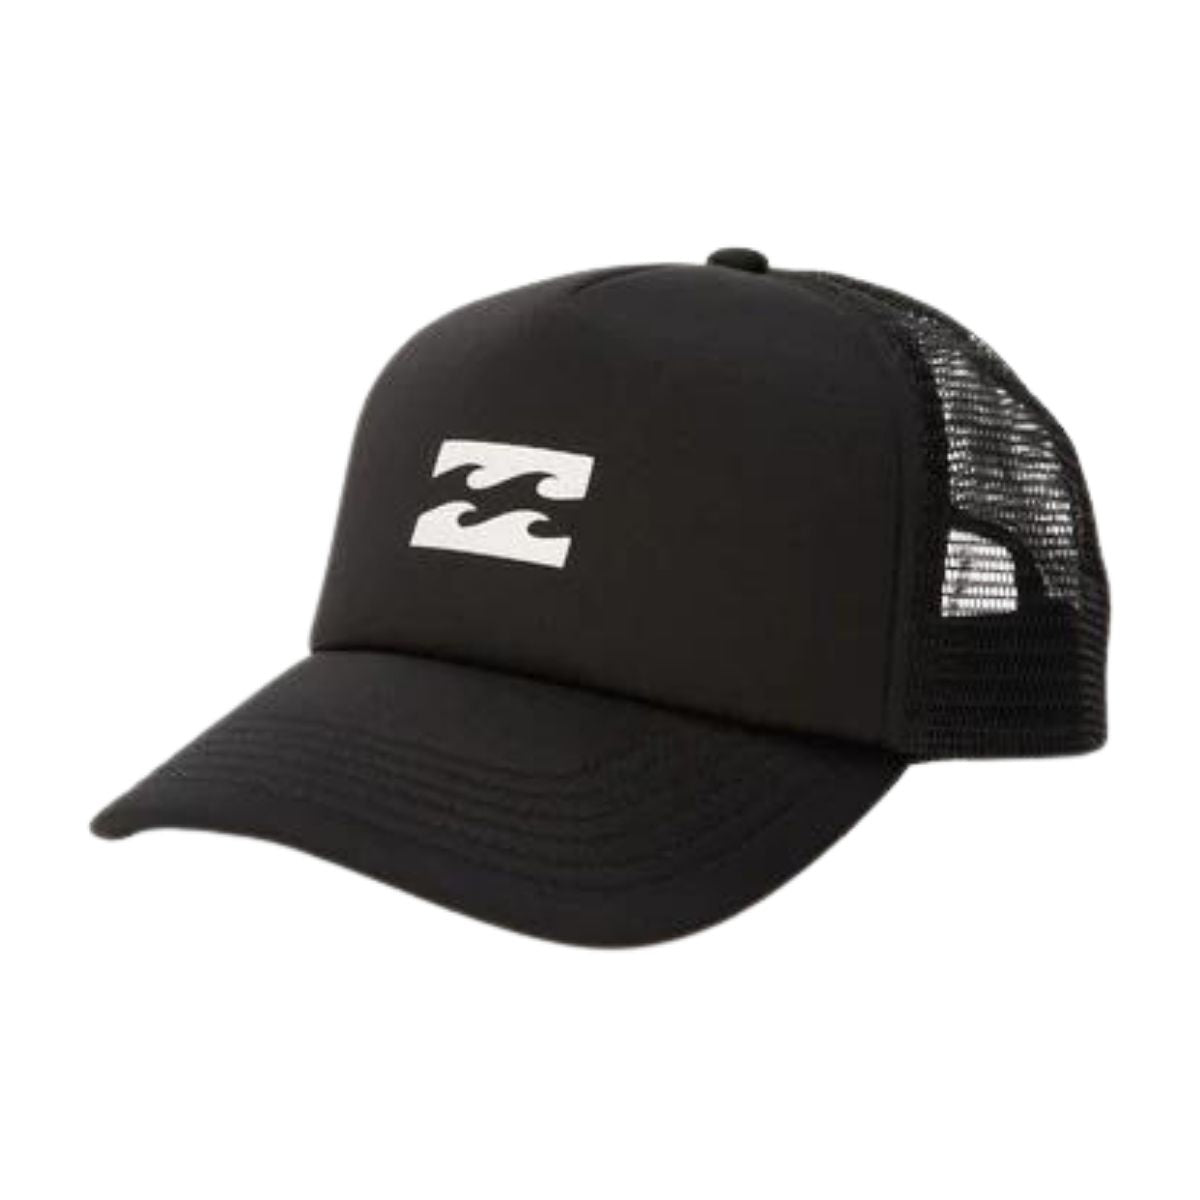 Billabong Podium Trucker Hat in Black/White - BoardCo